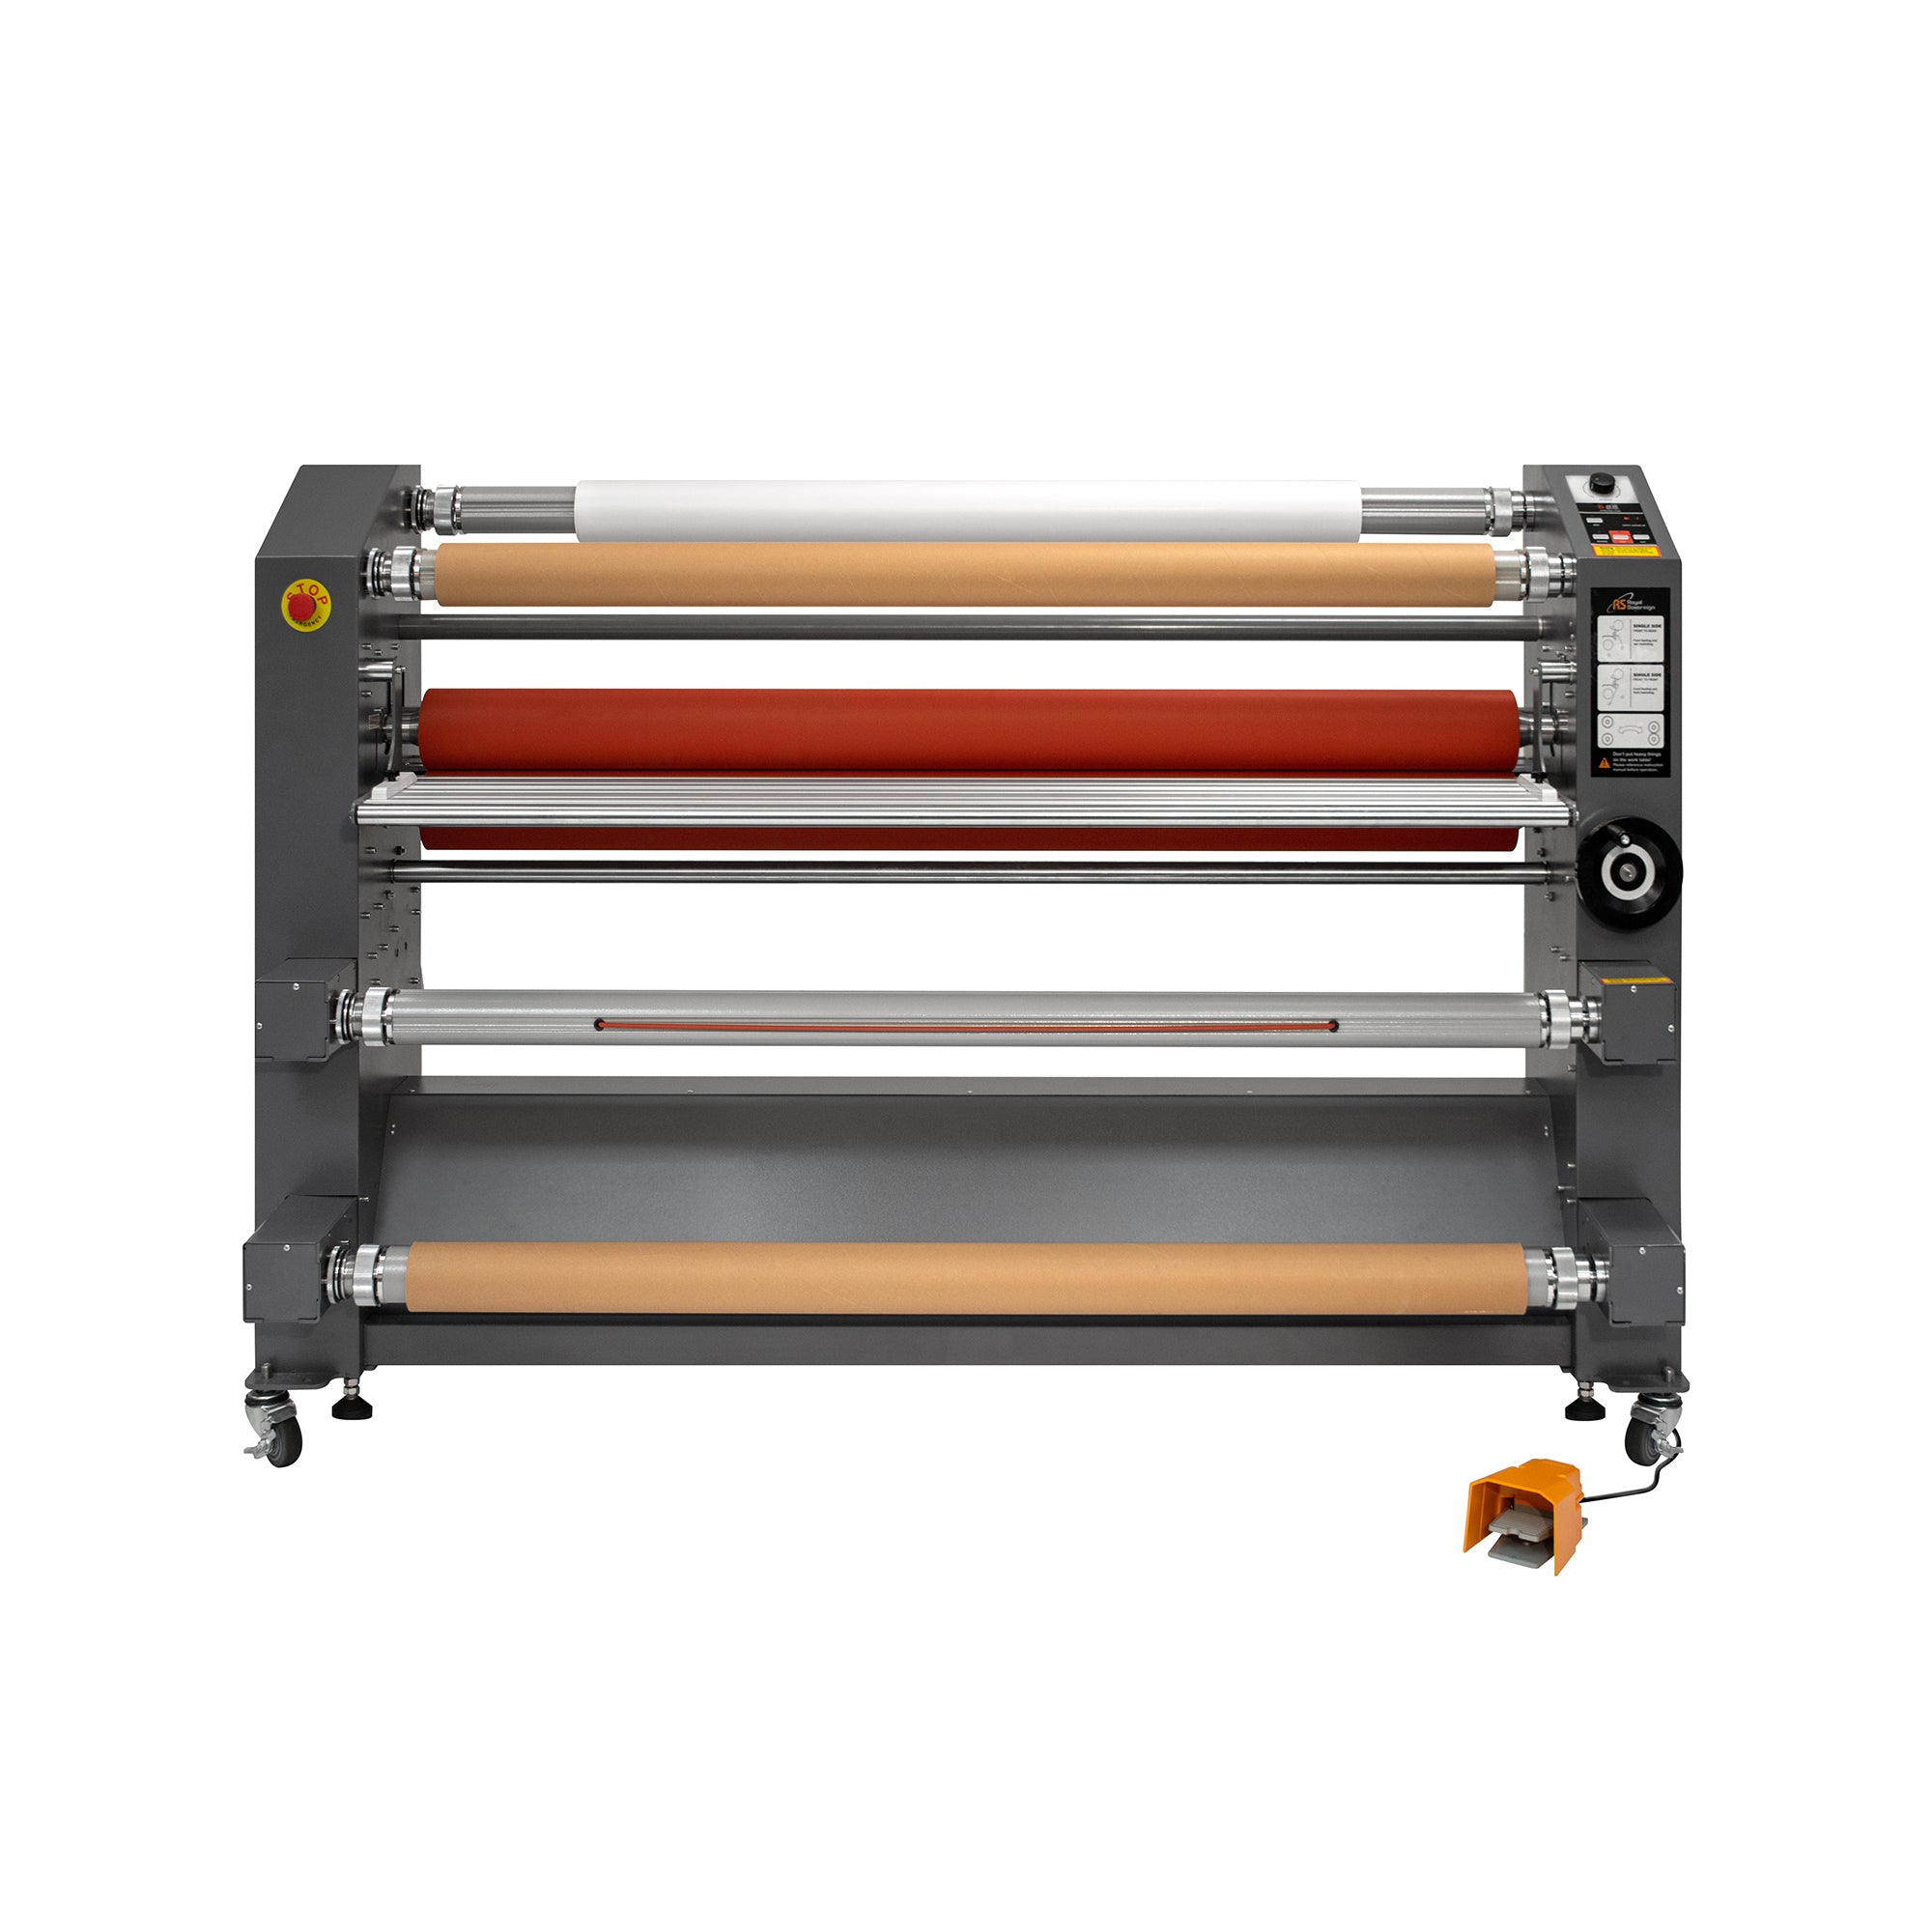 RSC-6500H, 65" Heat Assist Top Roller Wide Format Roll Laminator